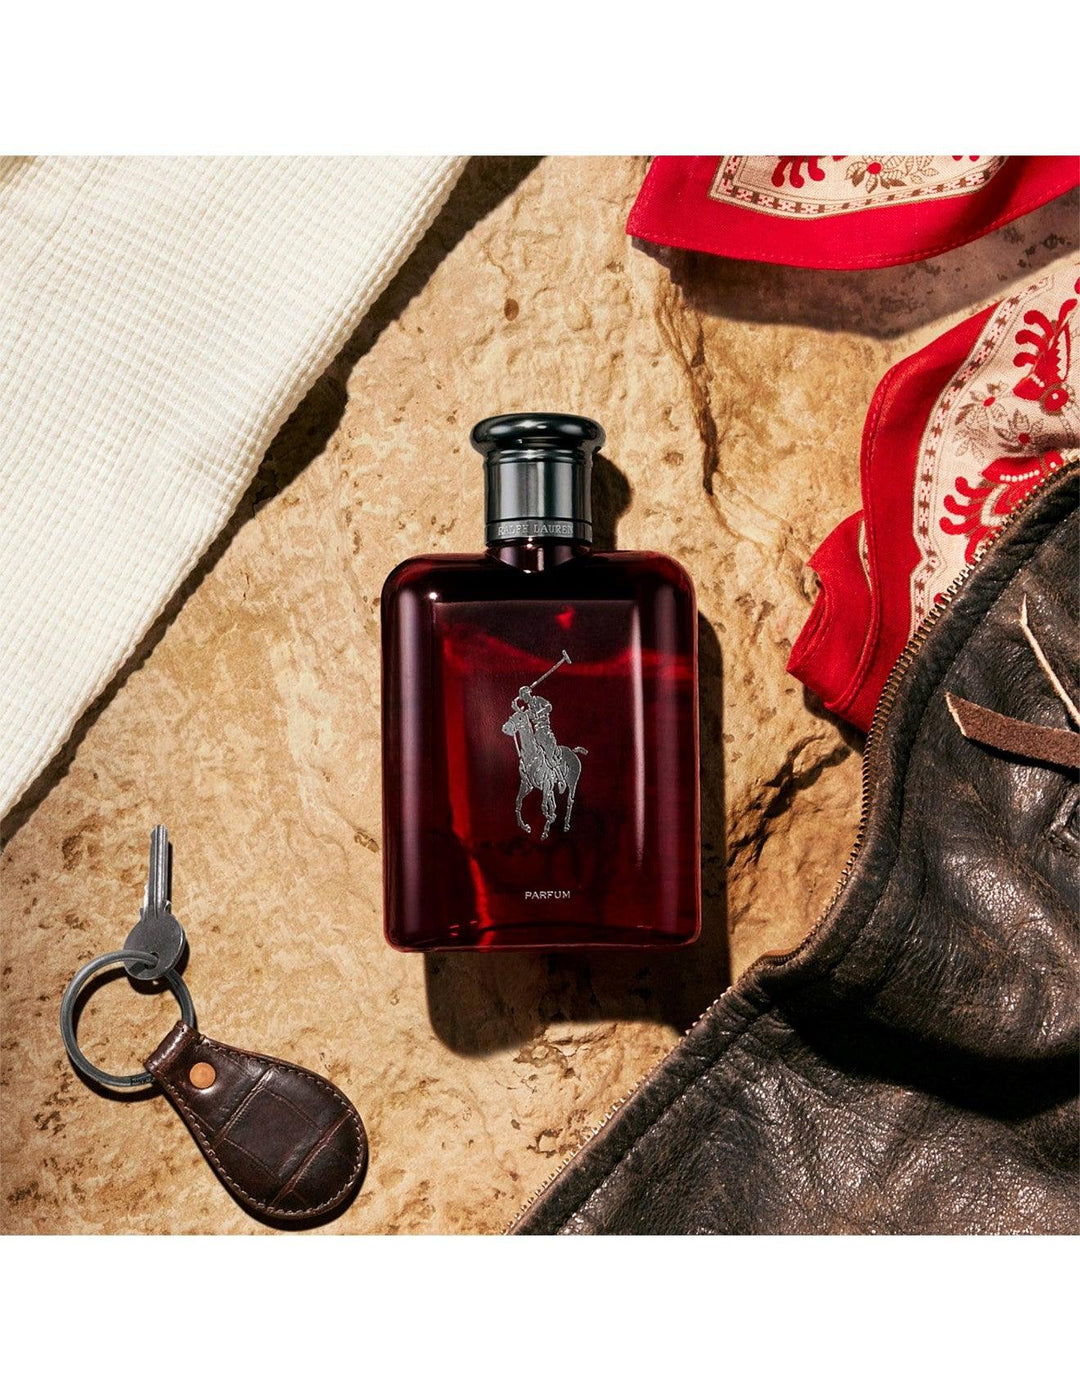 Ralph Lauren - Polo Red Parfum - Ascent Luxury Cosmetics